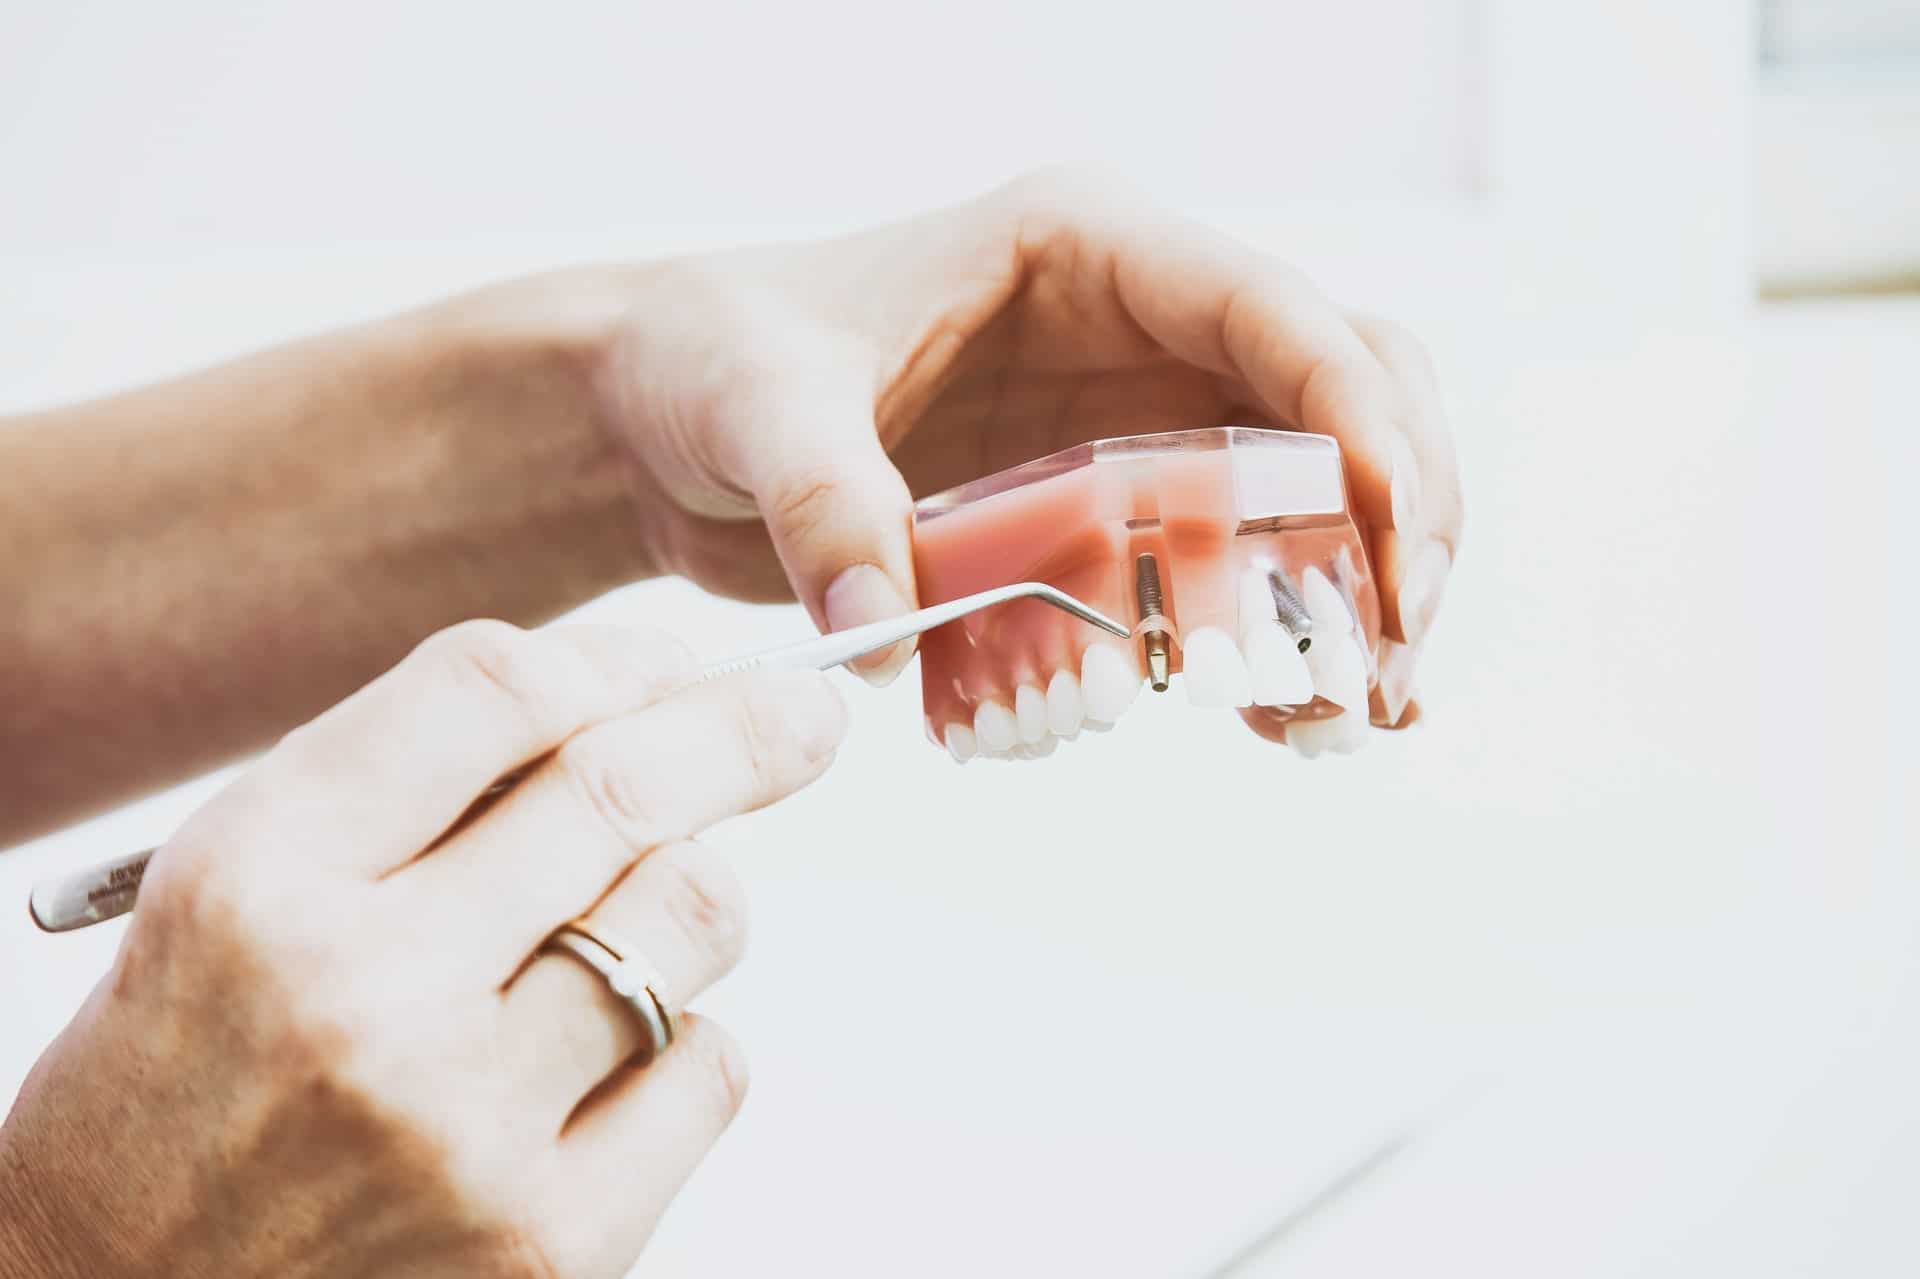 peter kasprzyk U1gvhqVQ2kQ unsplash - Four Main Types of Dental Implants According to Dentists